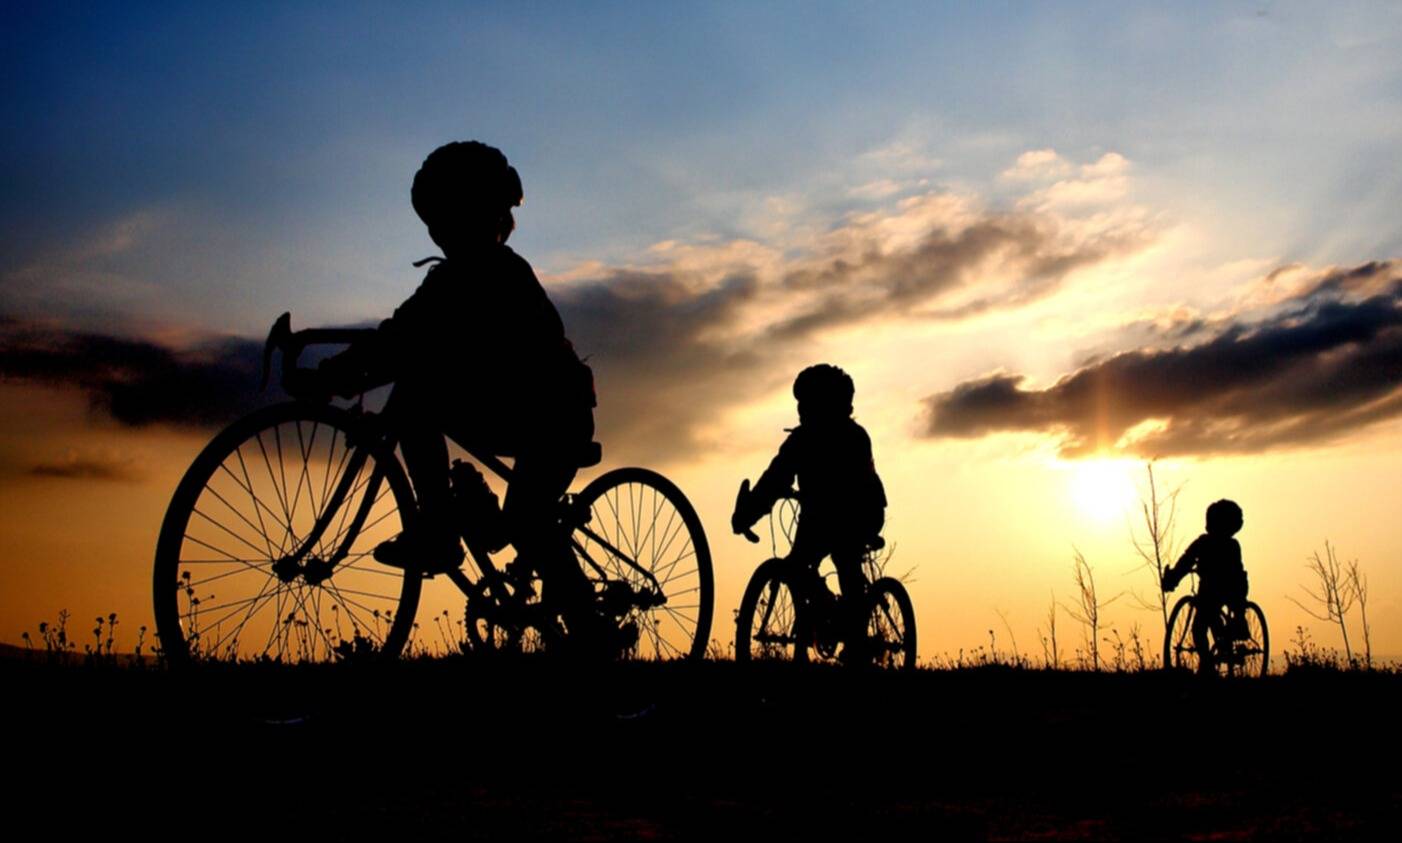 Two children on a bike